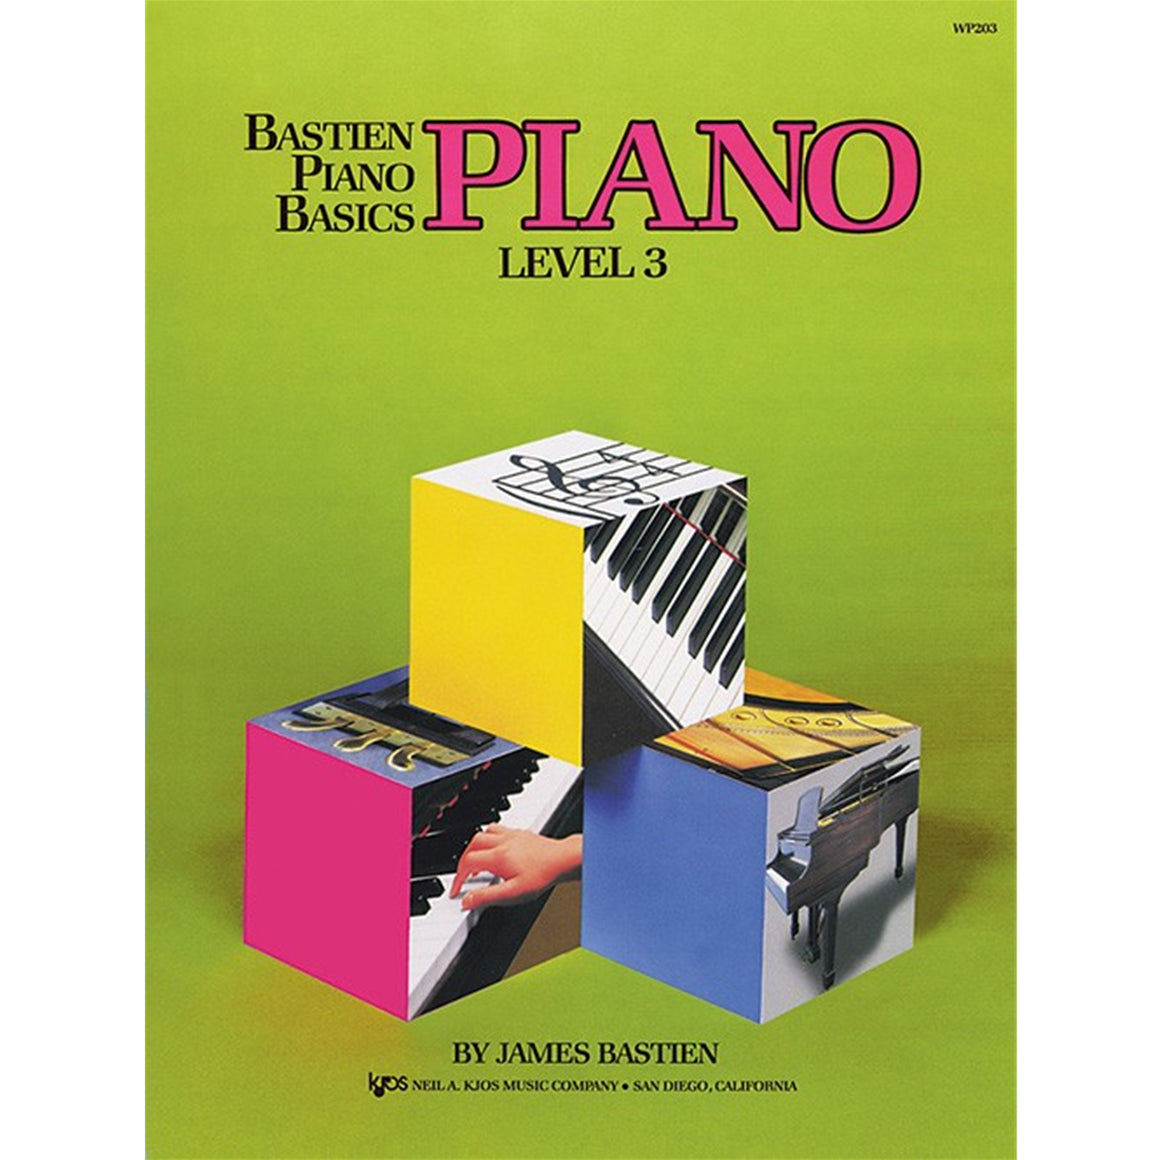 KJOS WP203 Bastien Piano Basics Lesson Level 3